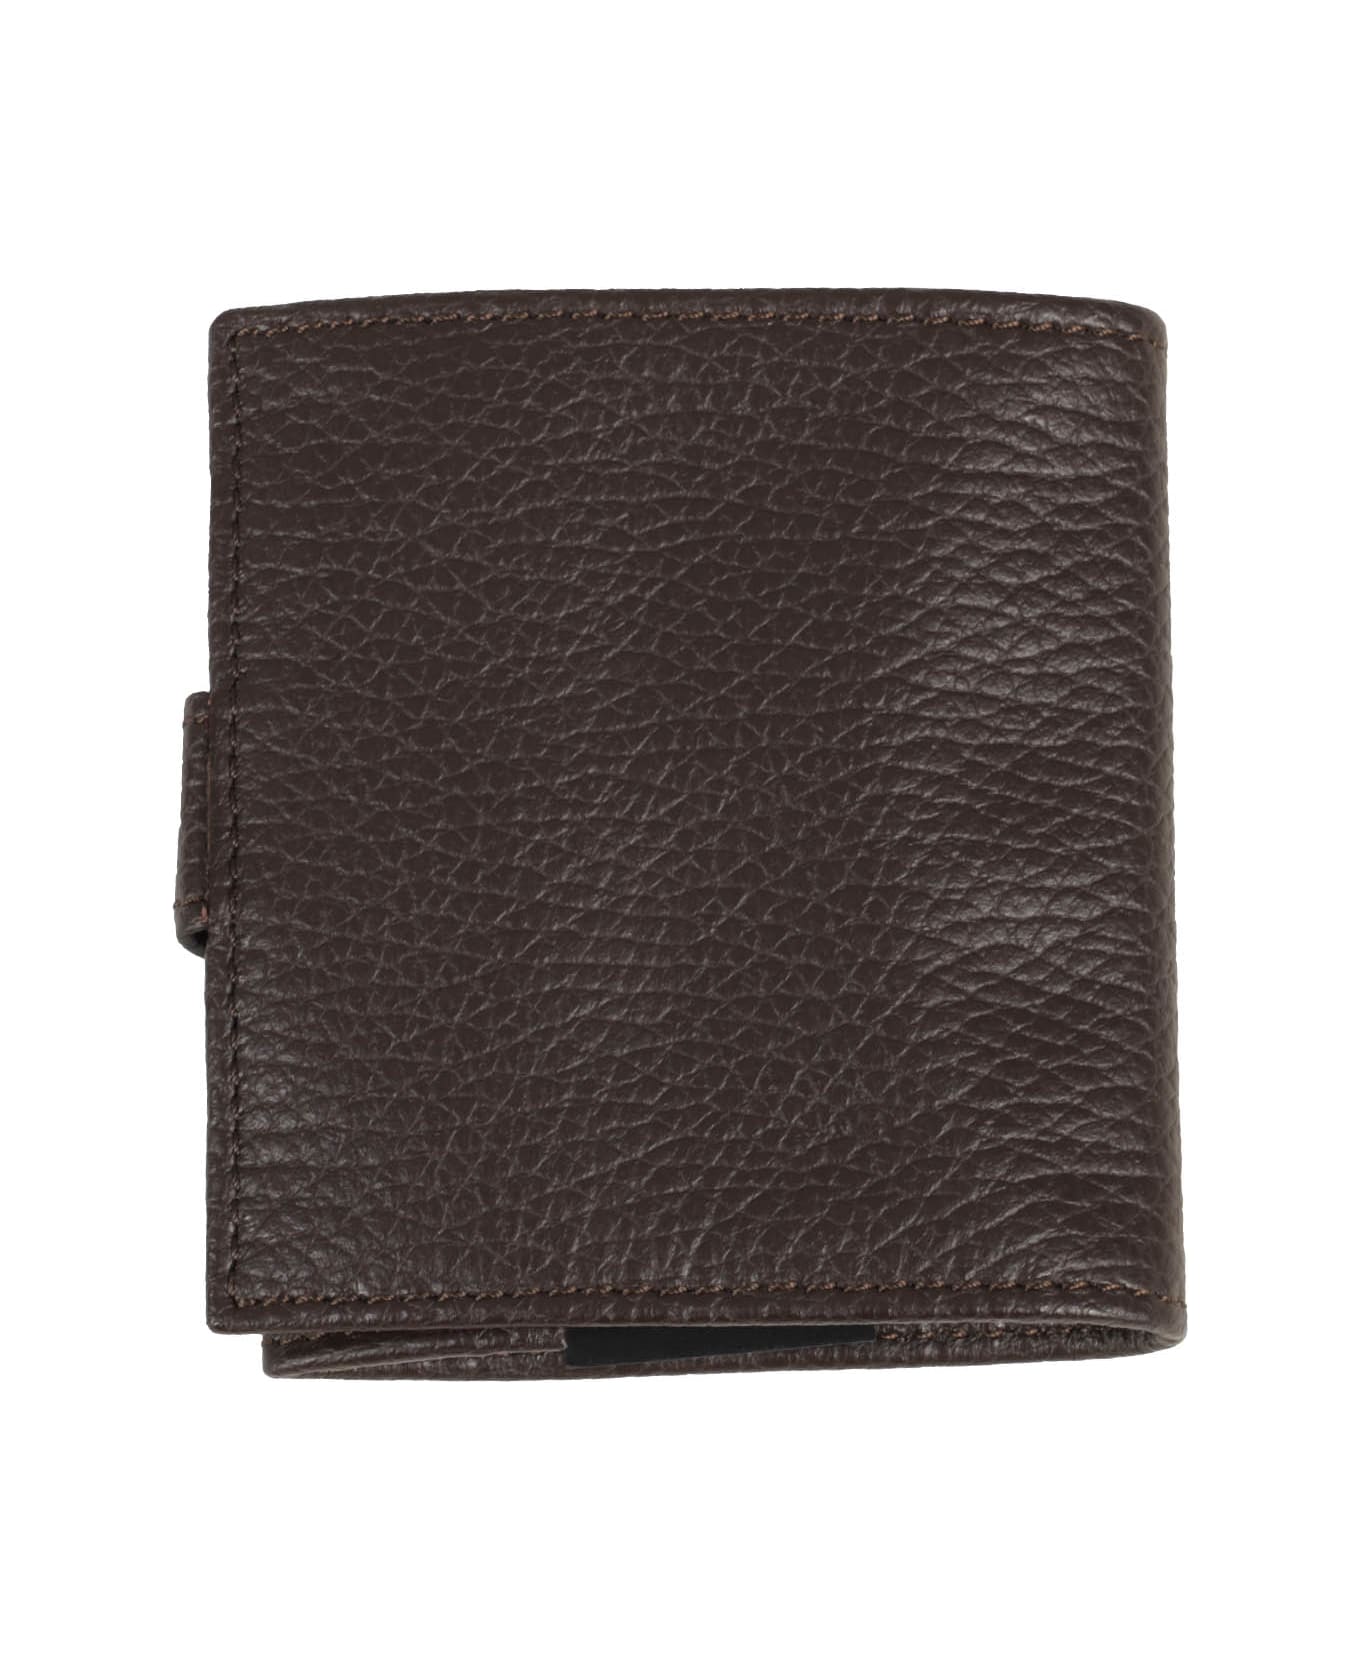 Orciani Leather Wallet - Eba Ebano